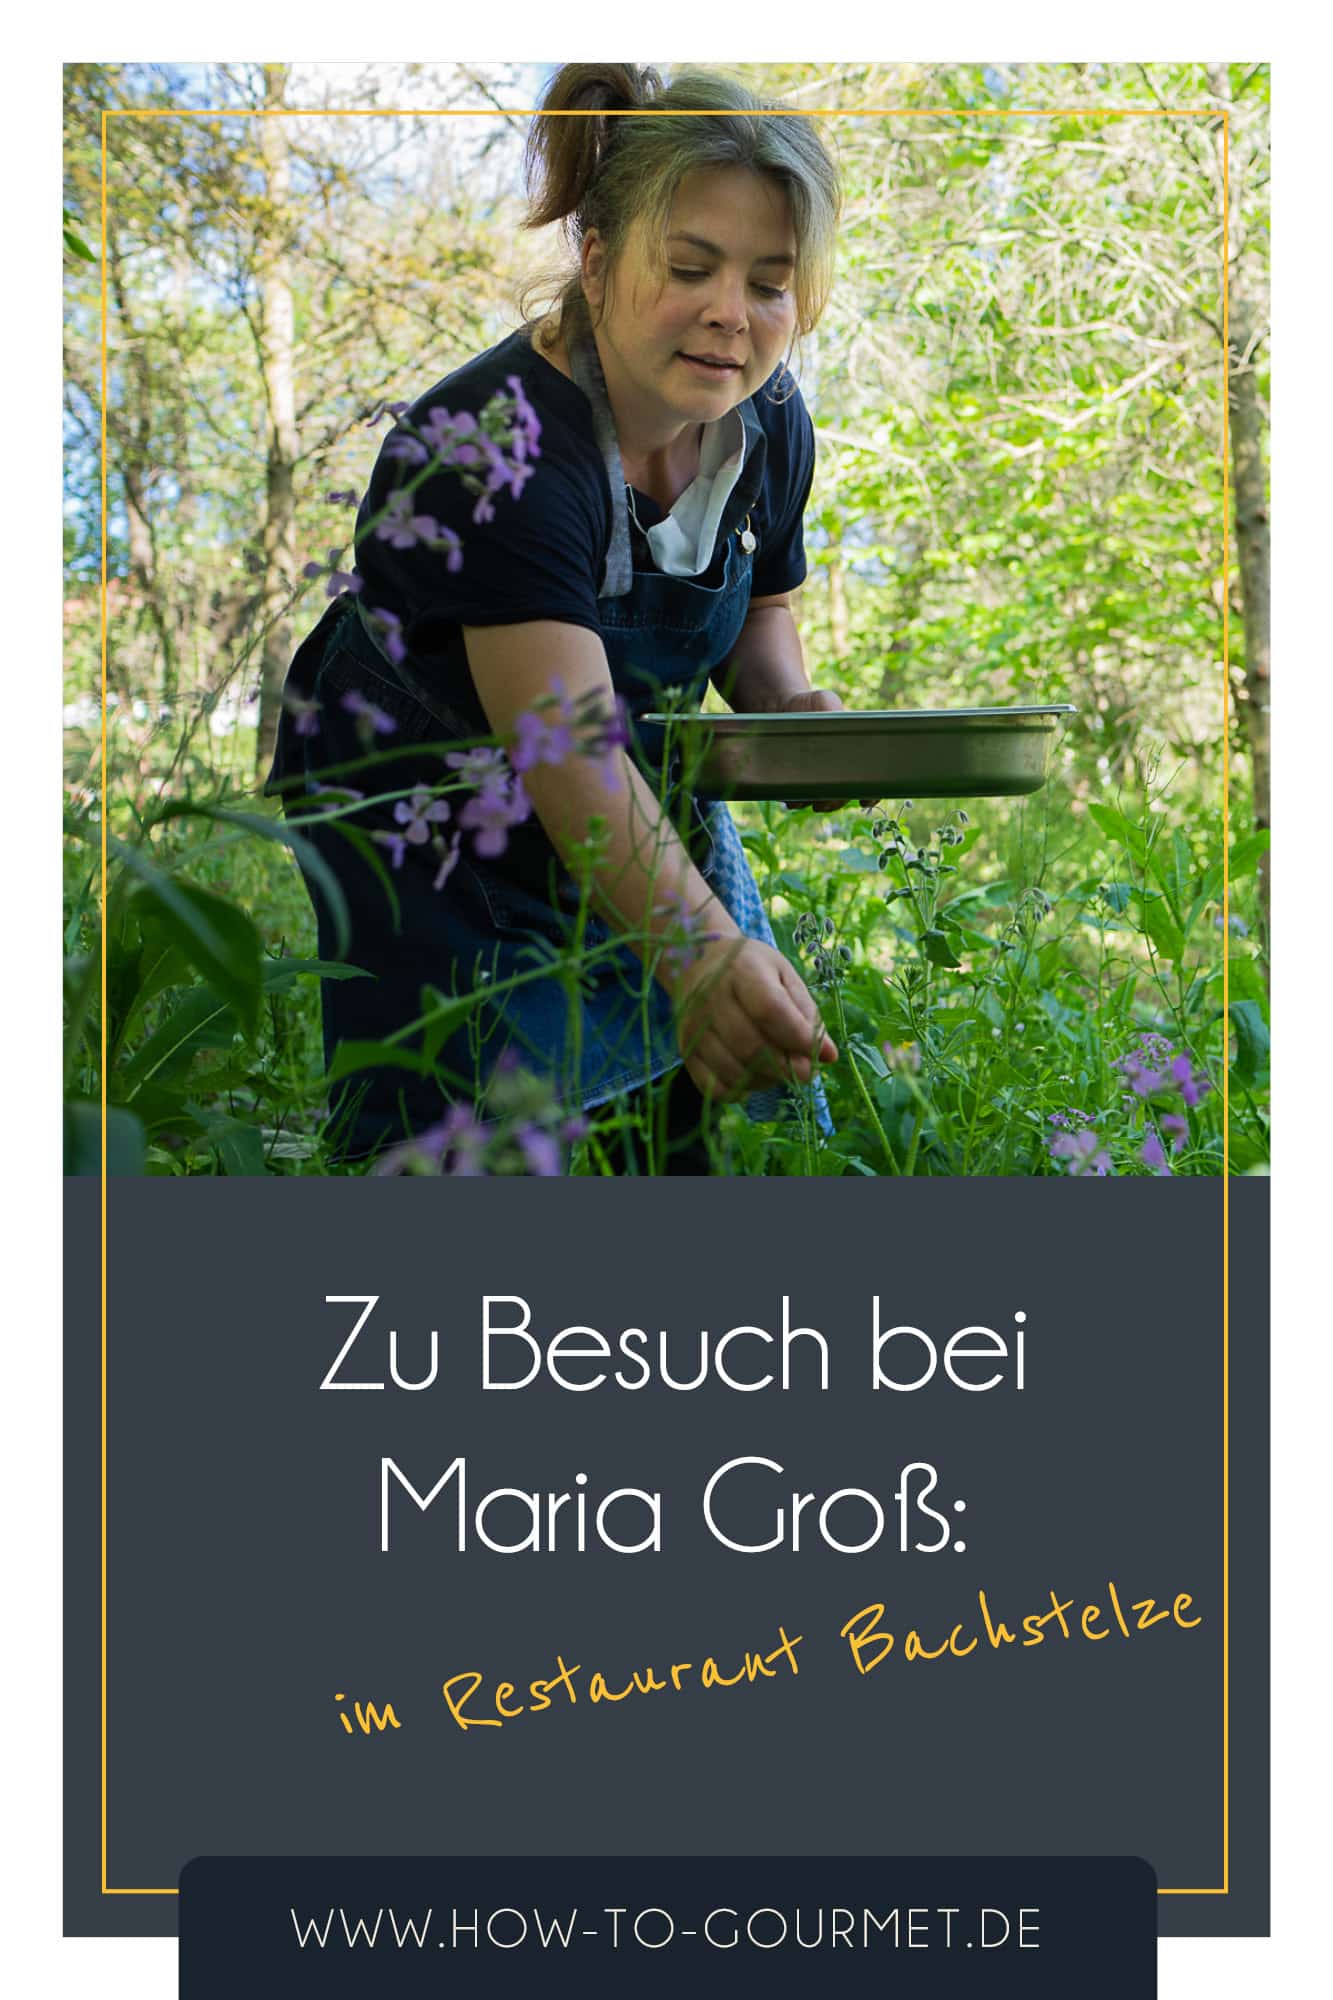 Maria Groß selbstversorger